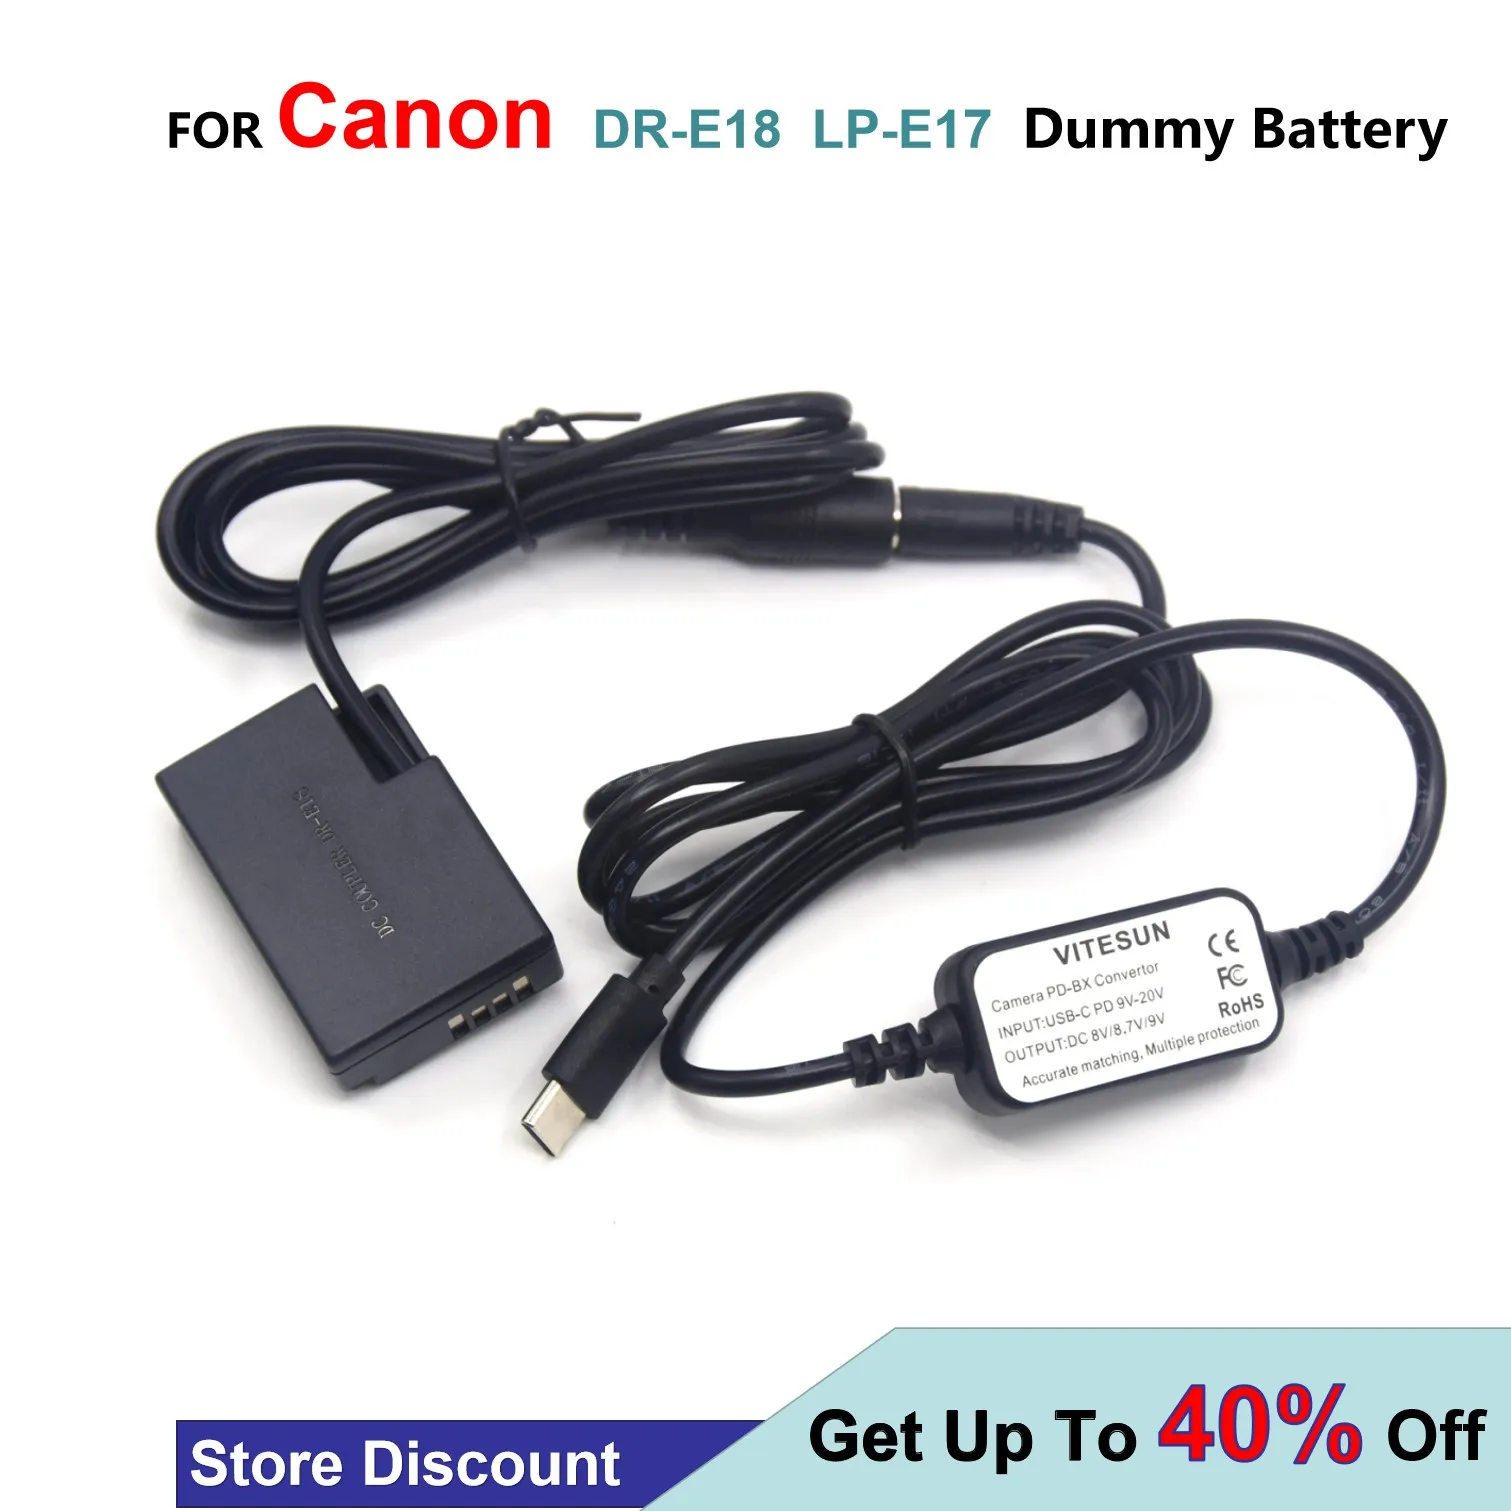 

DR-E18 DC Coupler LP-E17 Dummy Battery+USB-C PD Adapter Cable For Canon EOS 750D Kiss X8i R10 760D T6S 77D 800D 200D Rebel SL2